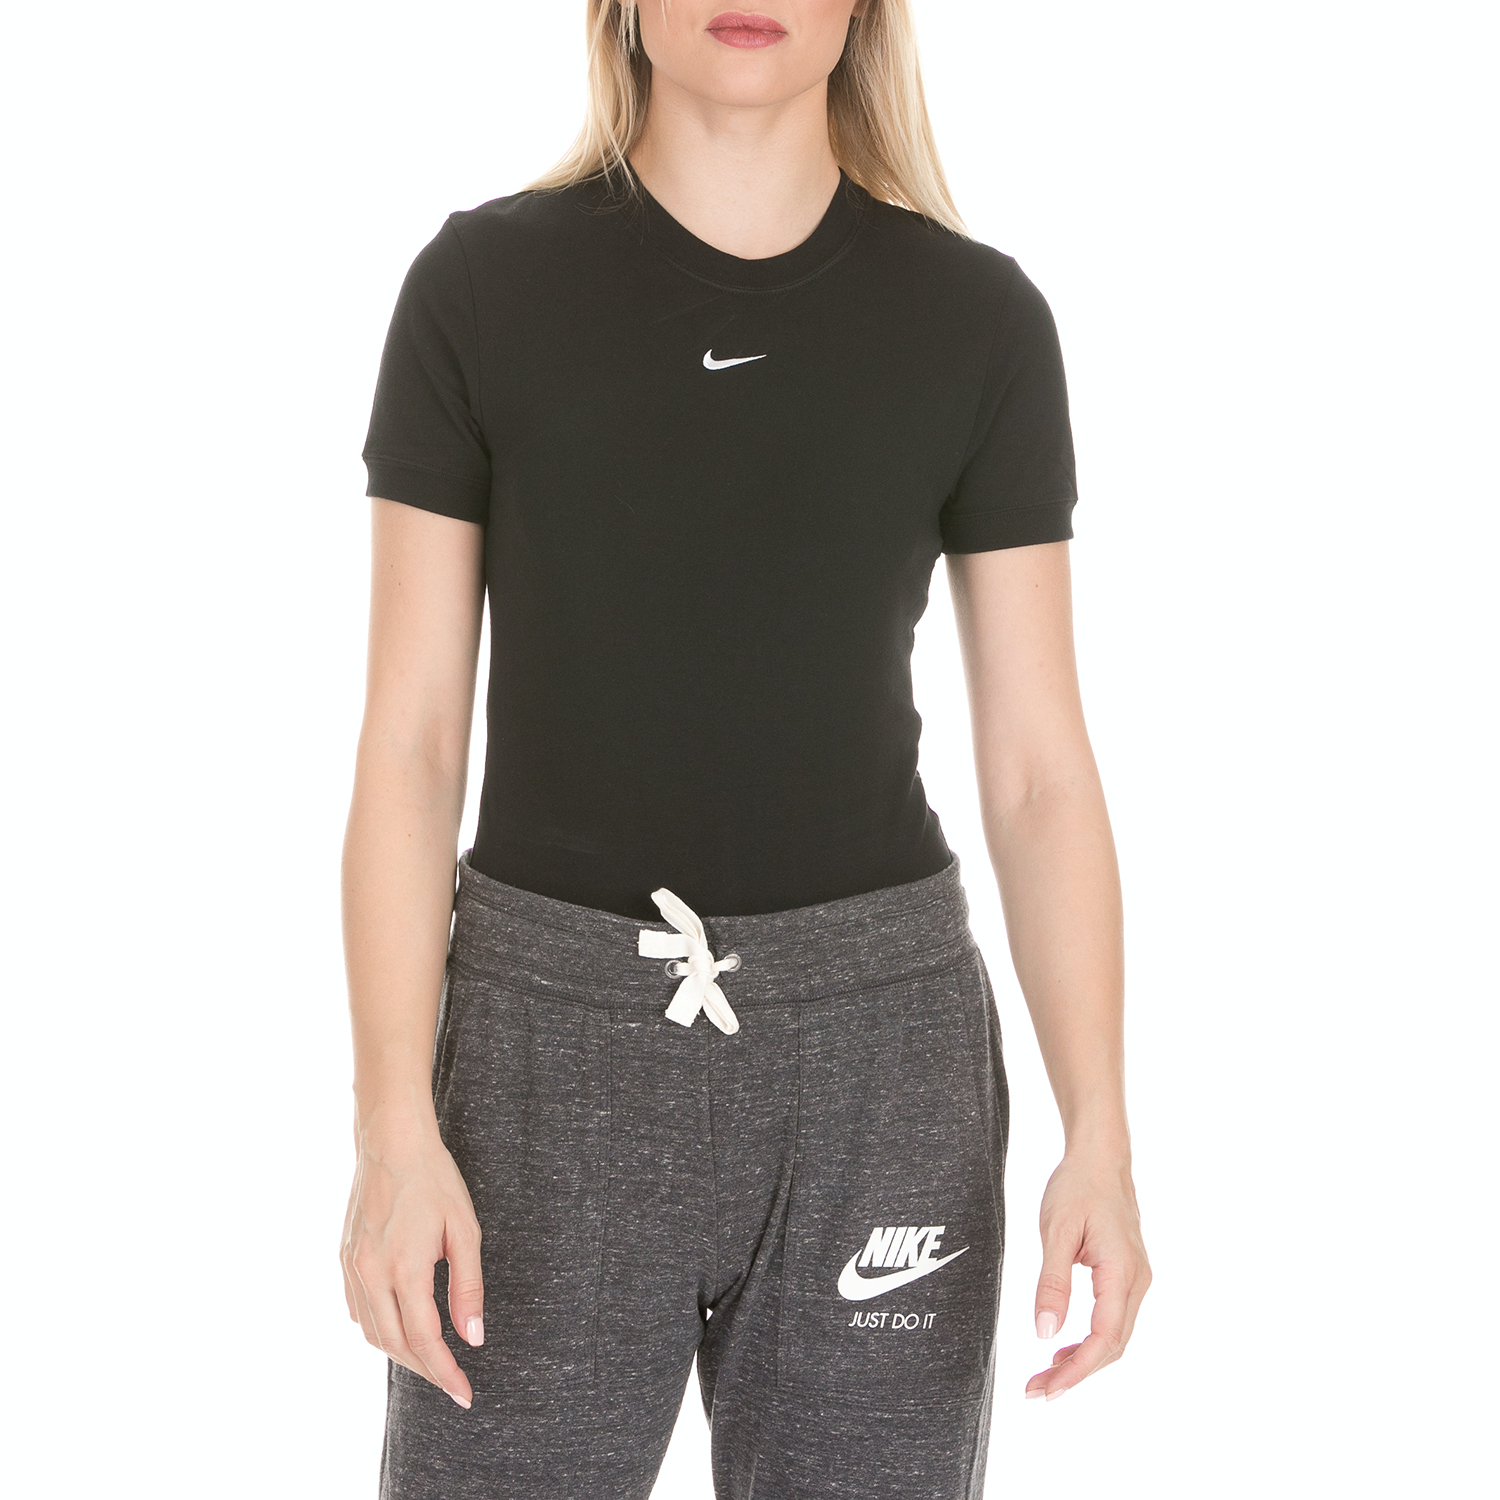 NIKE - Γυναικείο κορμάκι NIKE Sportswear Essential μαύρο. Γυναικεία/Ρούχα/Αθλητικά/T-shirt-Τοπ